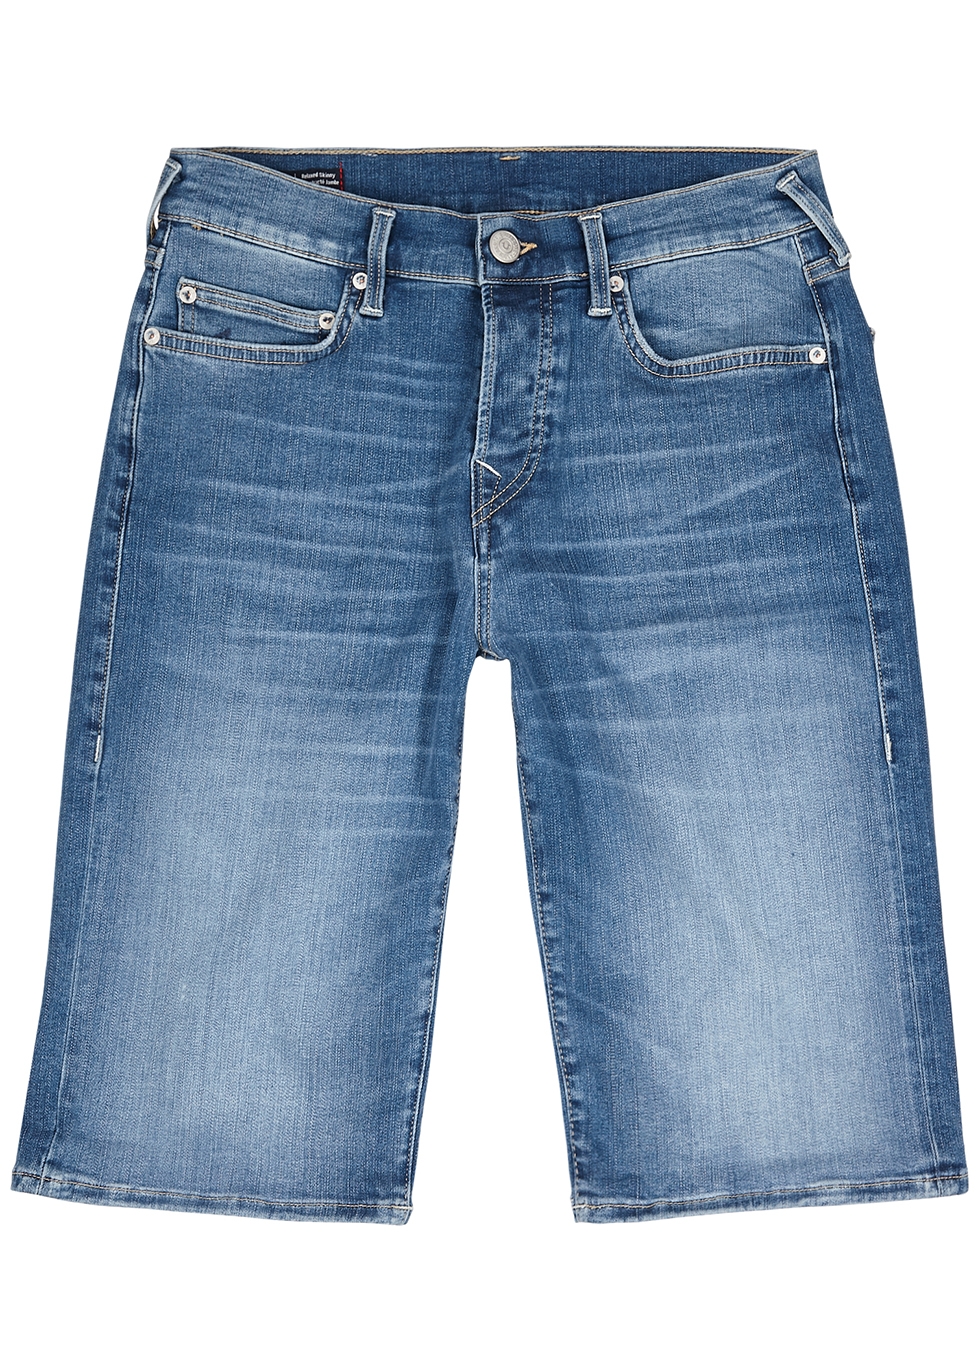 true religion jean shorts